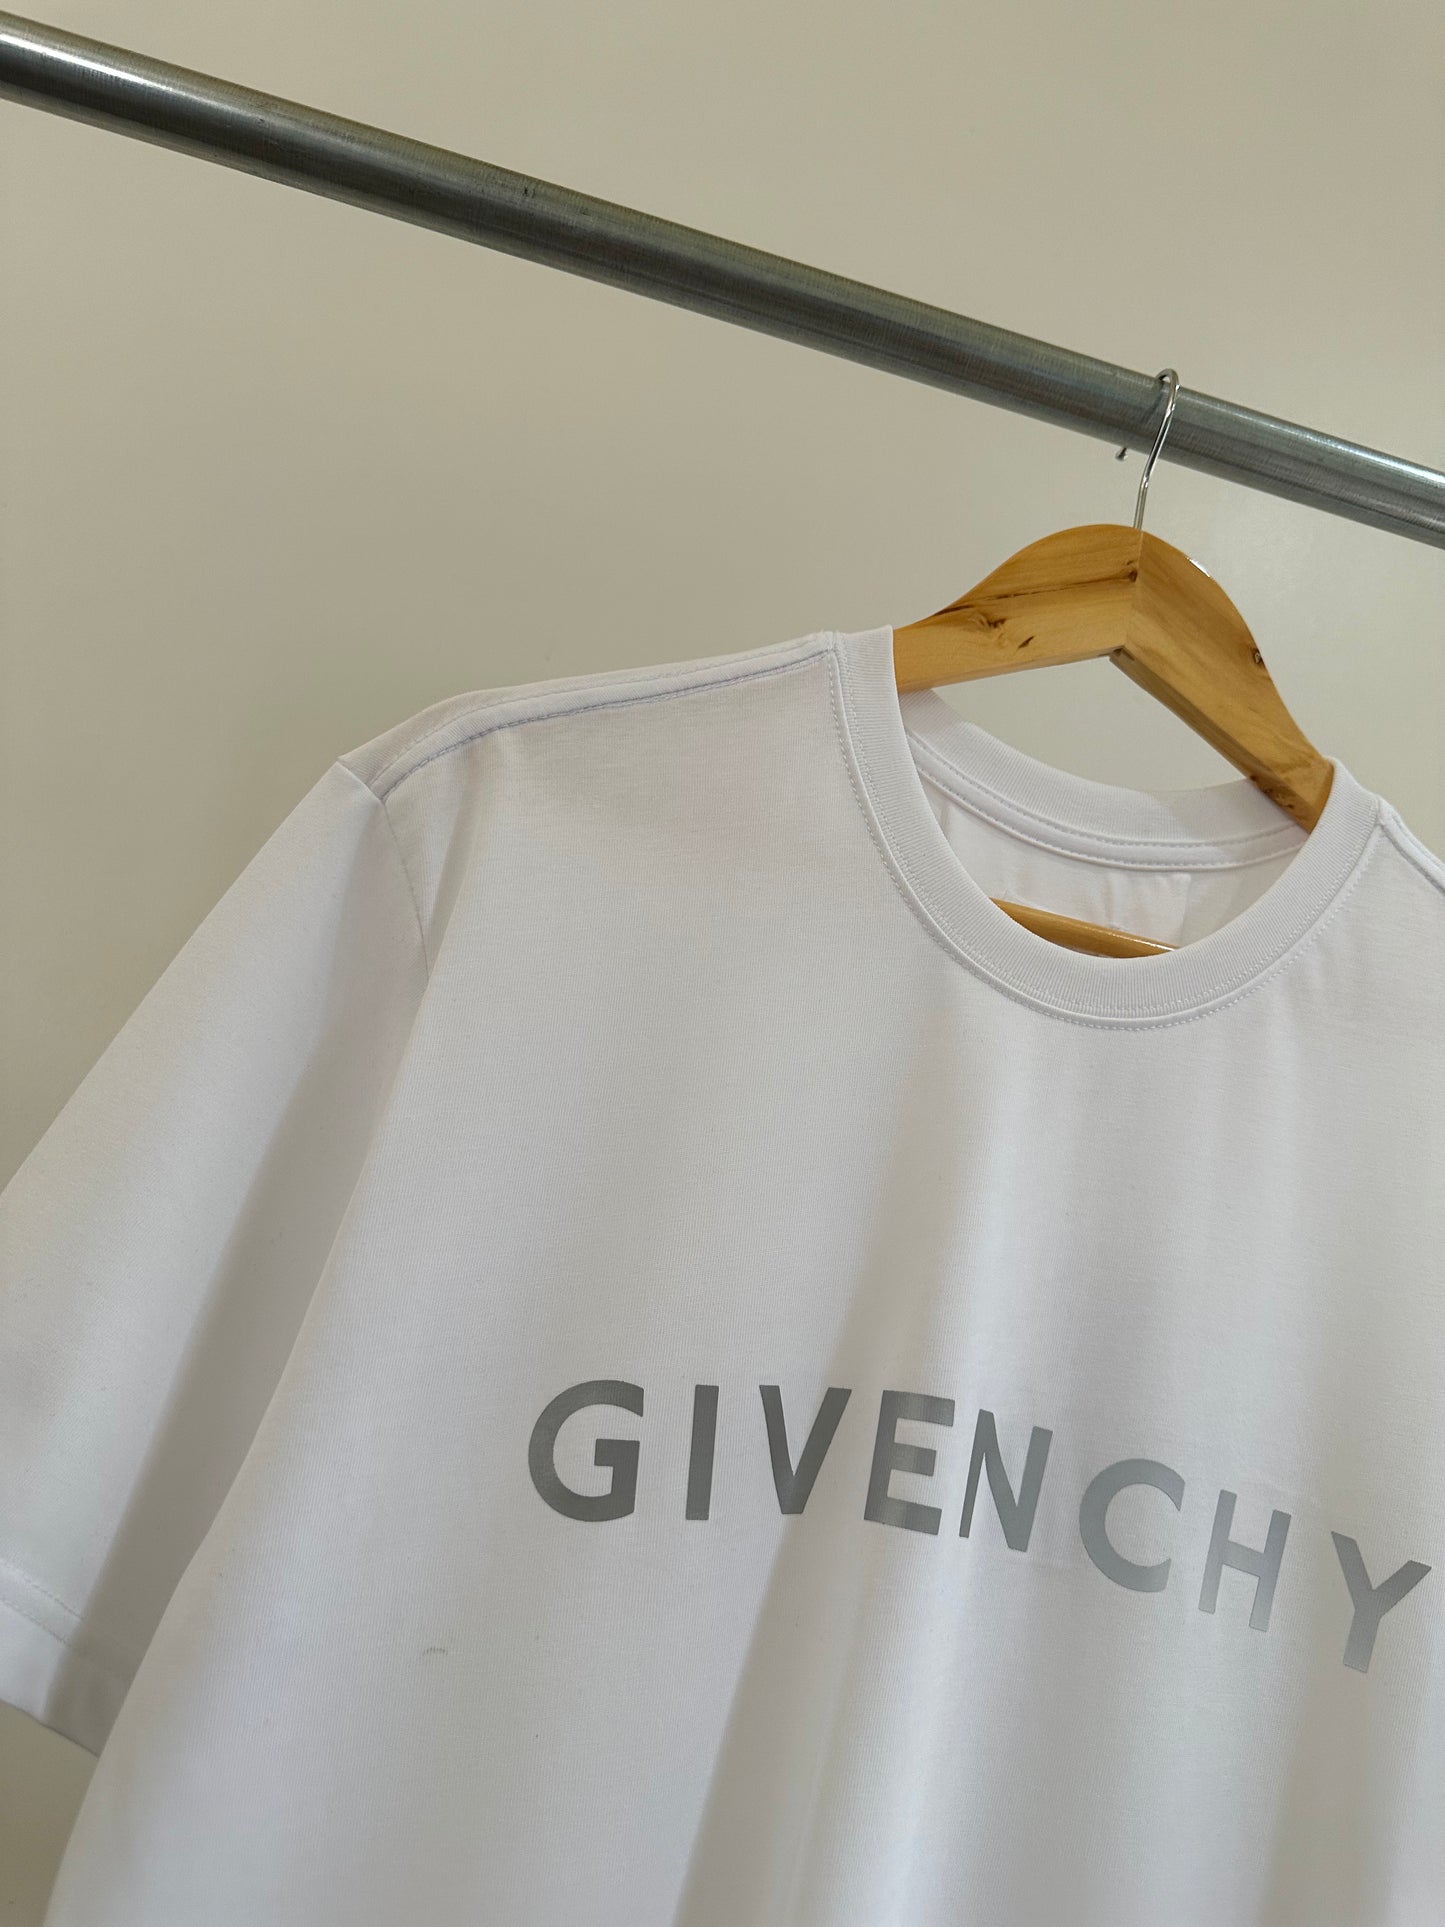 Givenchy Reflective T-Shirt (White)